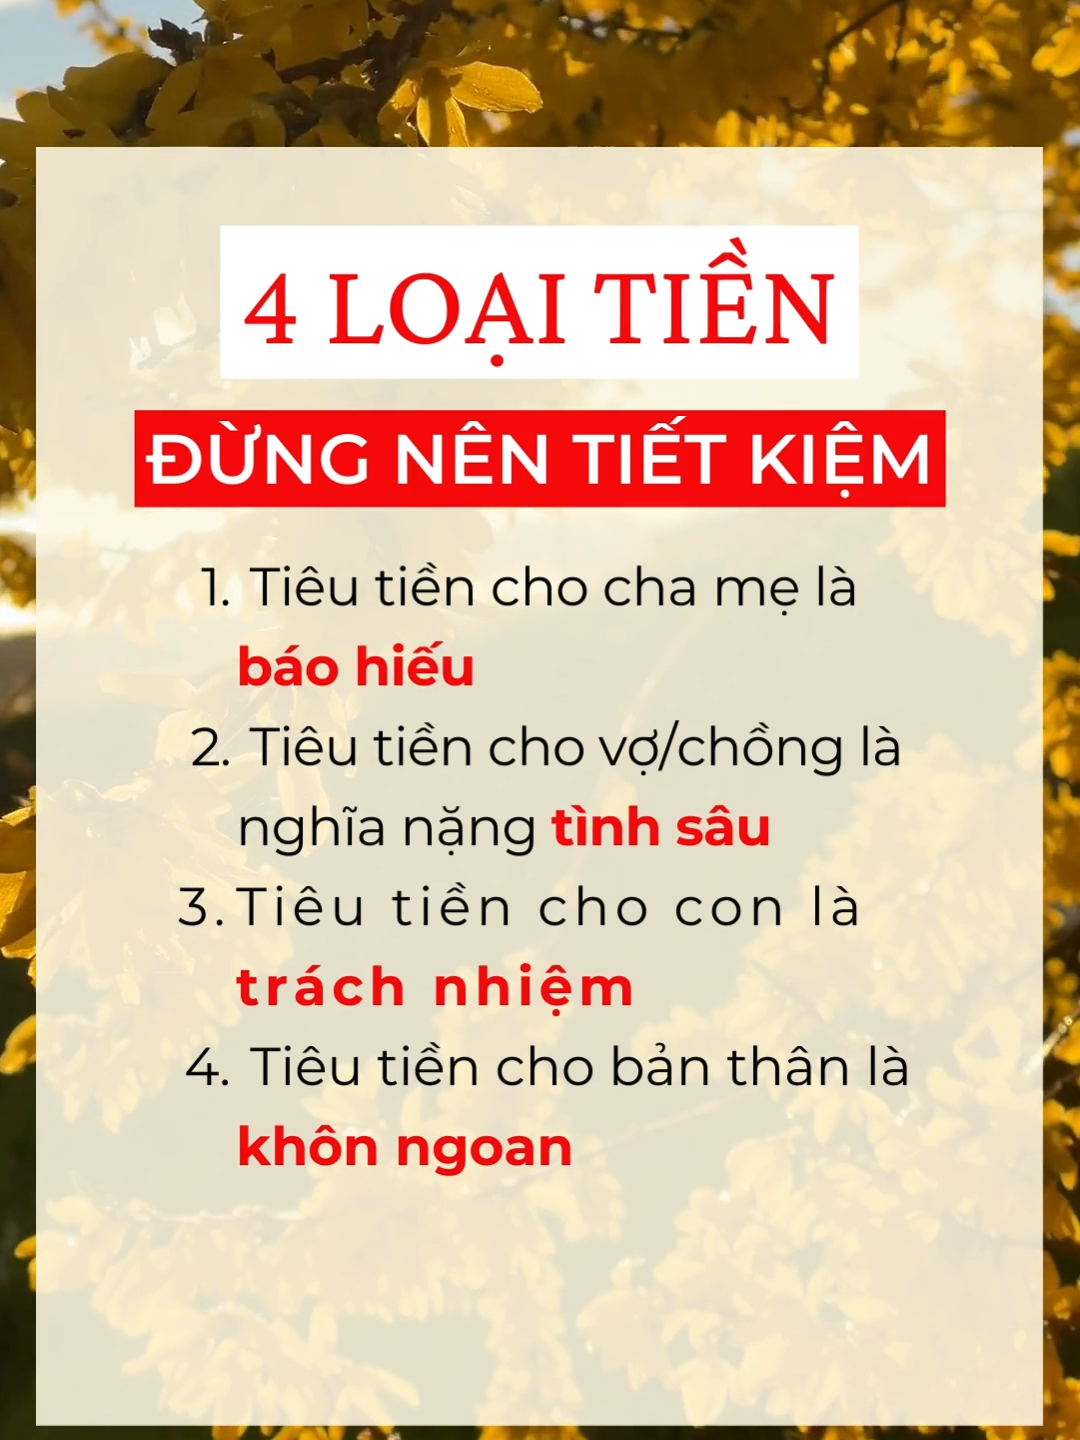 4 Loại tiền đừng nên tiết kiệm...💰💰 #cotusuongofficial #xuhuong #LearnOnTikTok